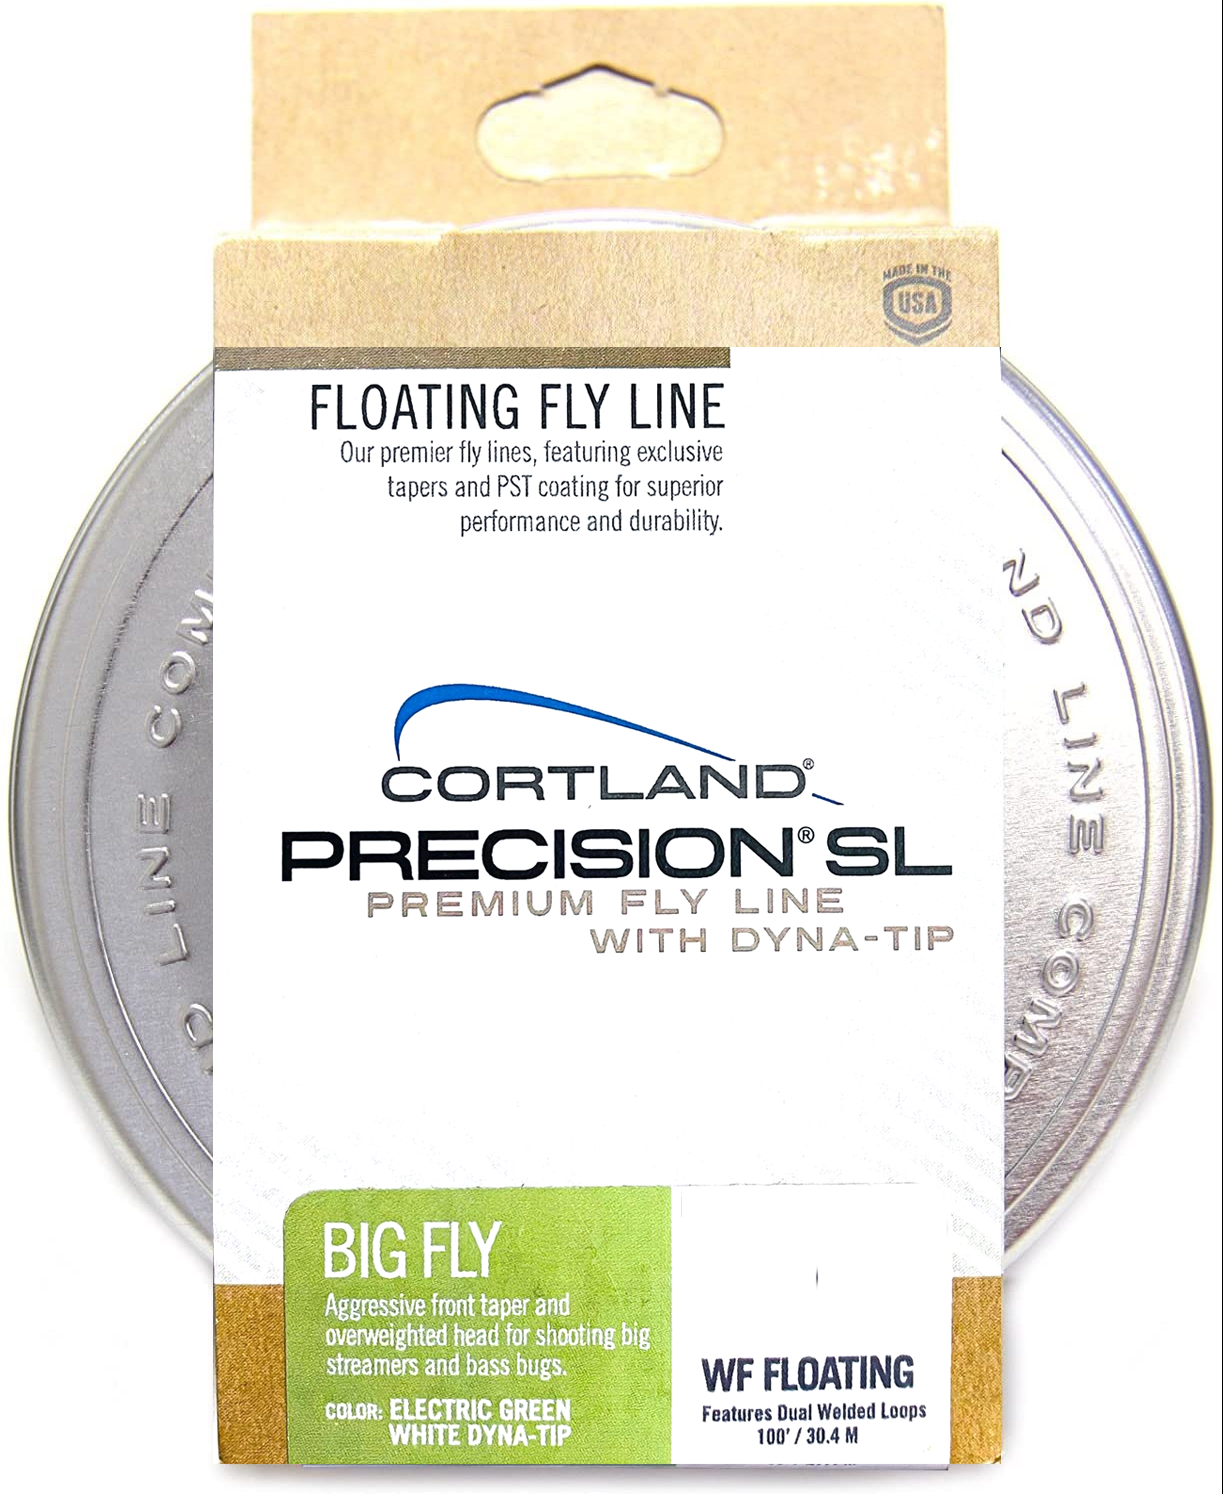 CORTLAND Precision Big Fly Fly Line